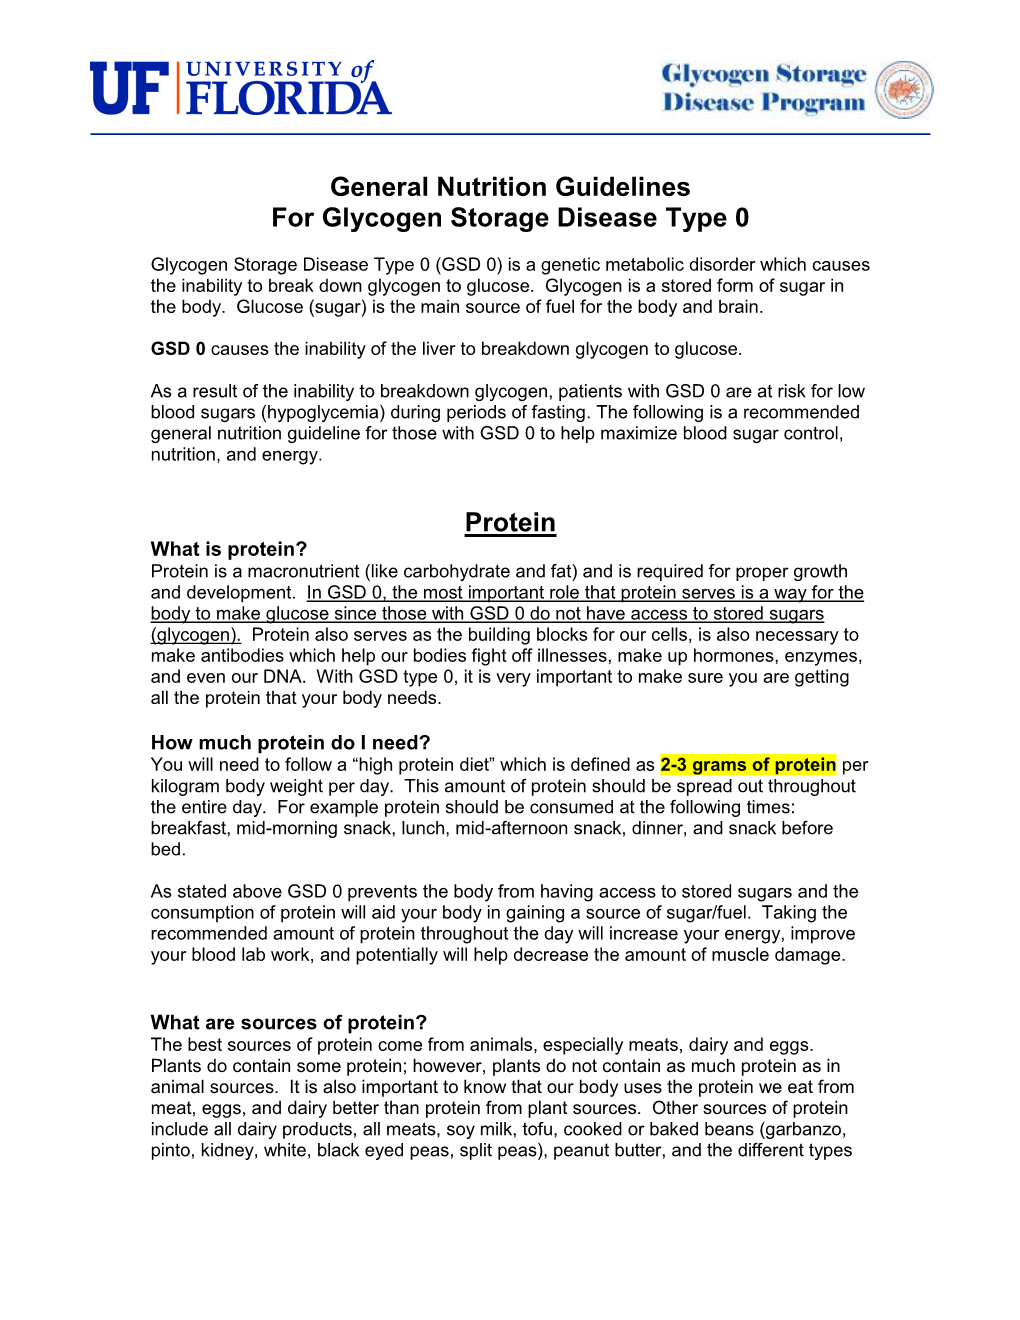 General Nutrition Guidelines for Glycogen Storage Disease Type 0